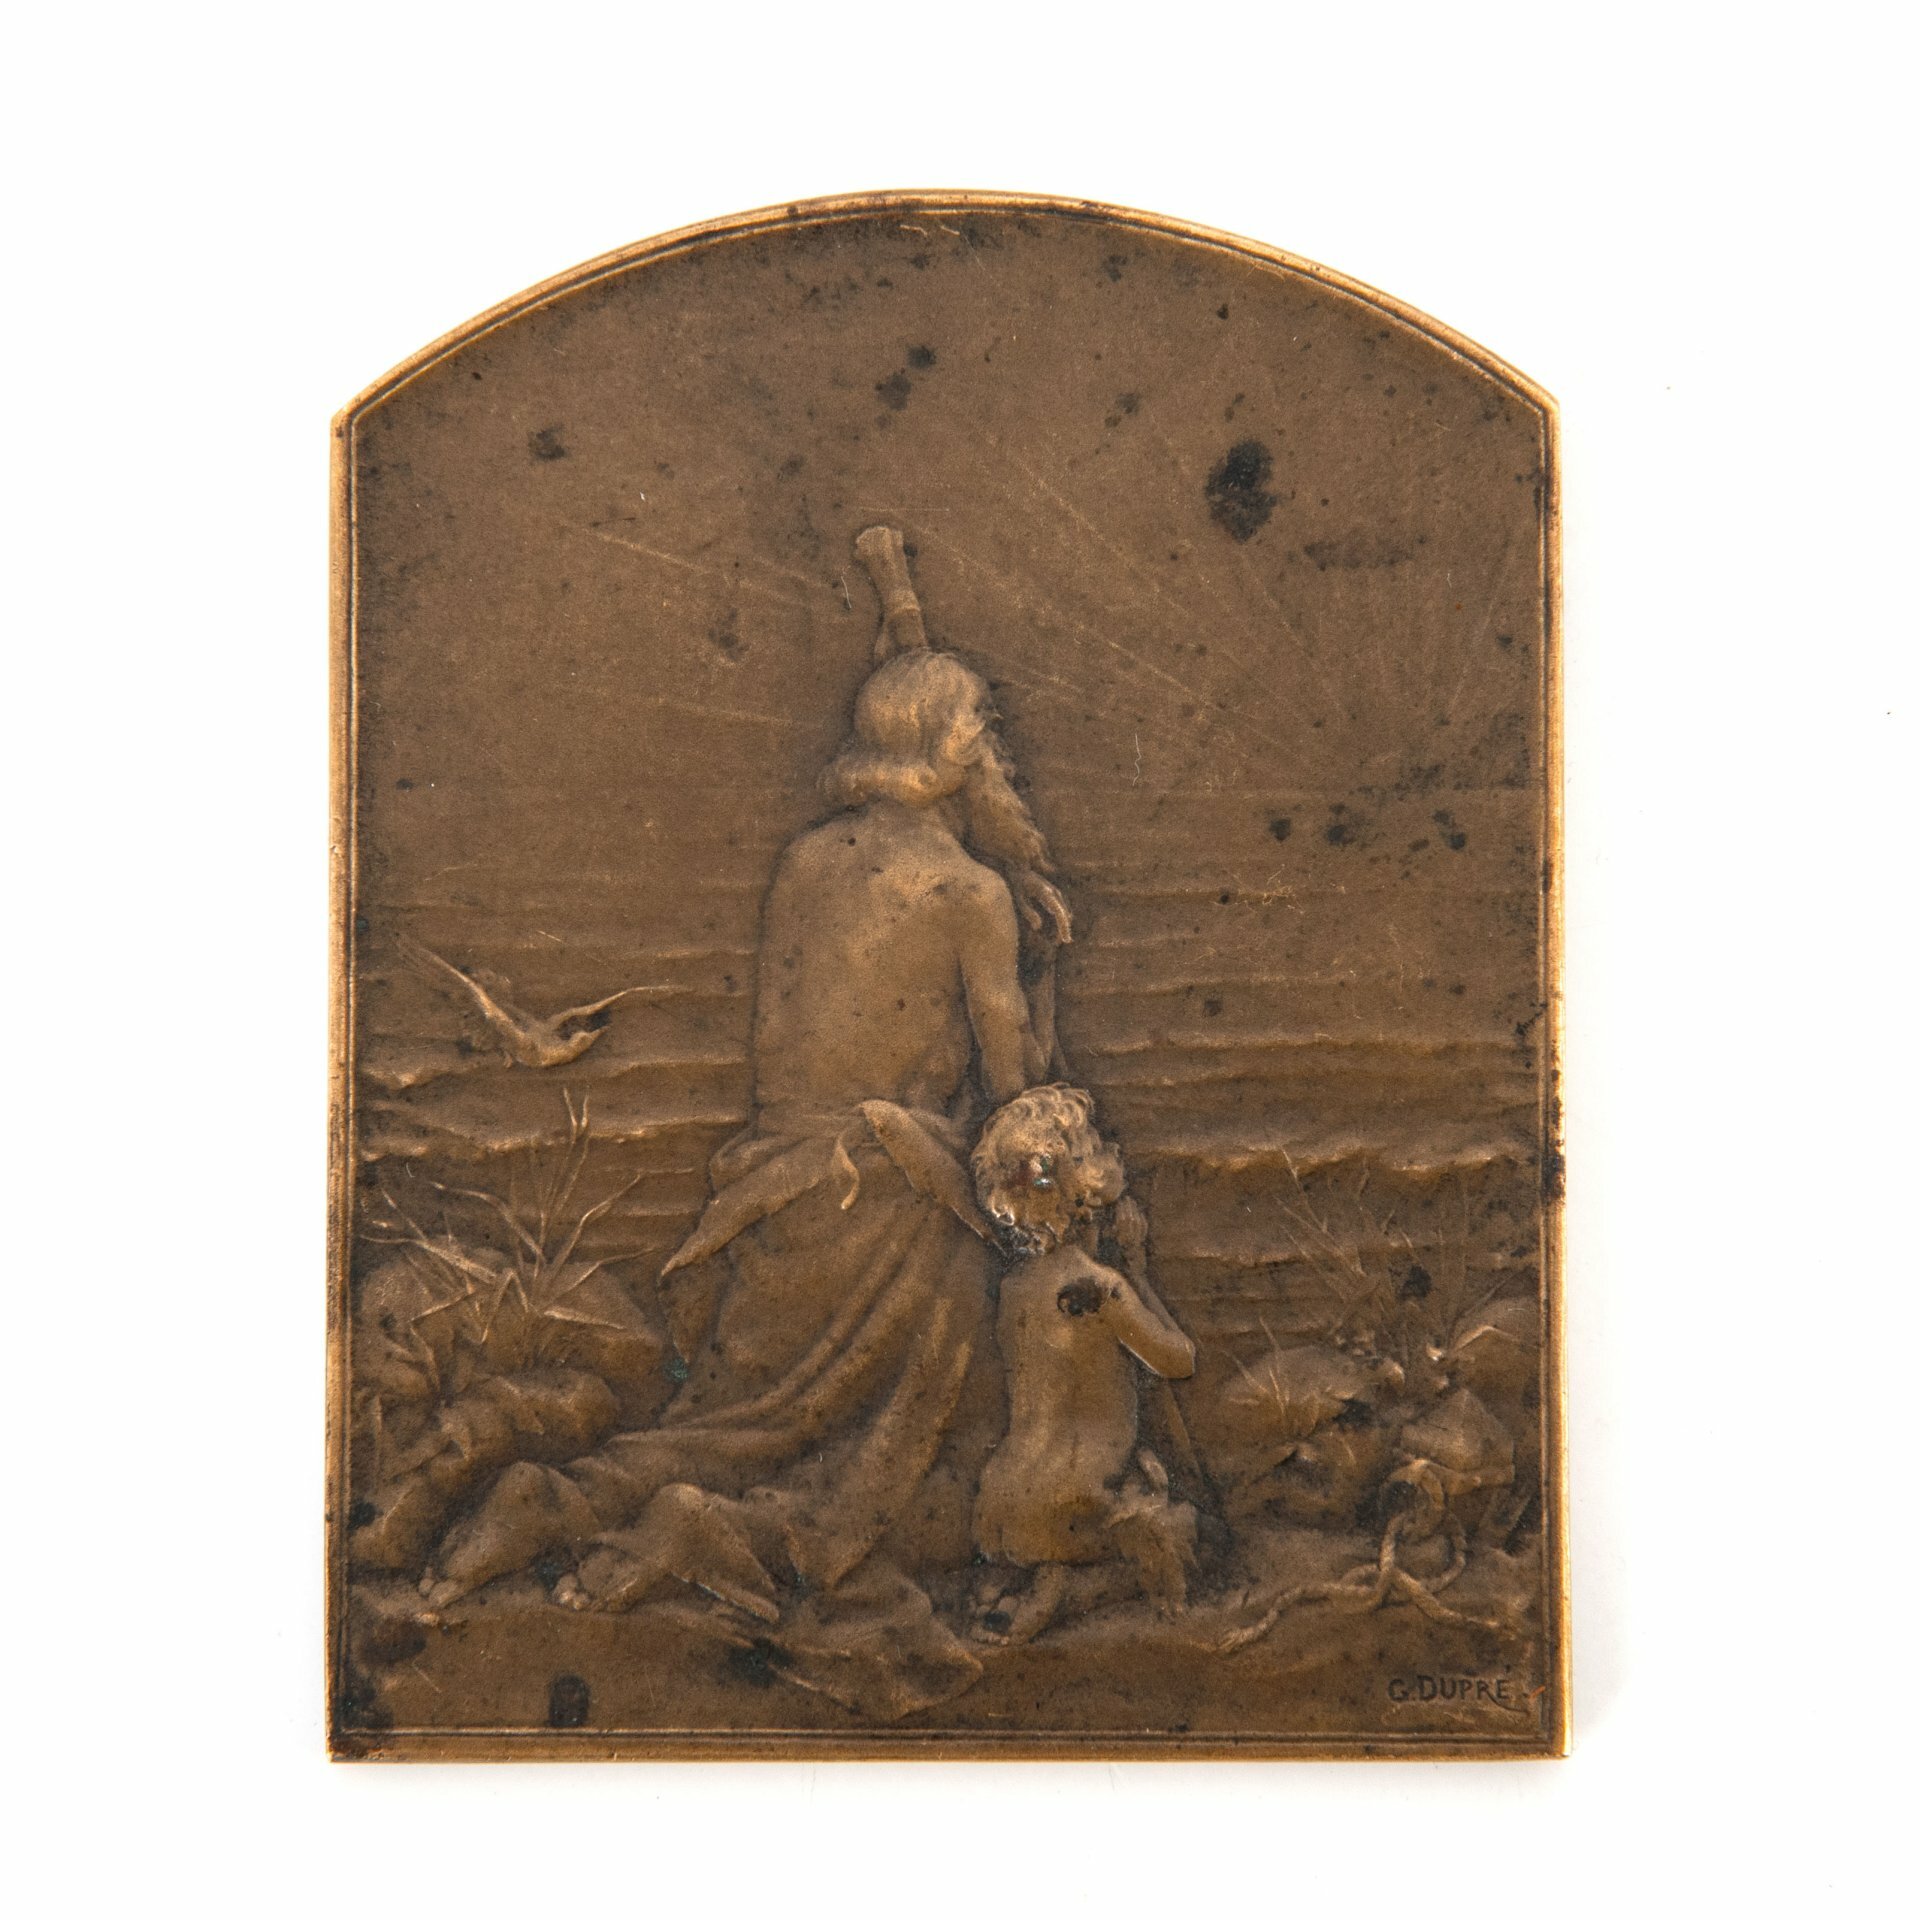 Плакетка "Salut au soleil" ("Приветствие солнцу"), скульптор Georges Dupré (Жорж Дюпре), бронза